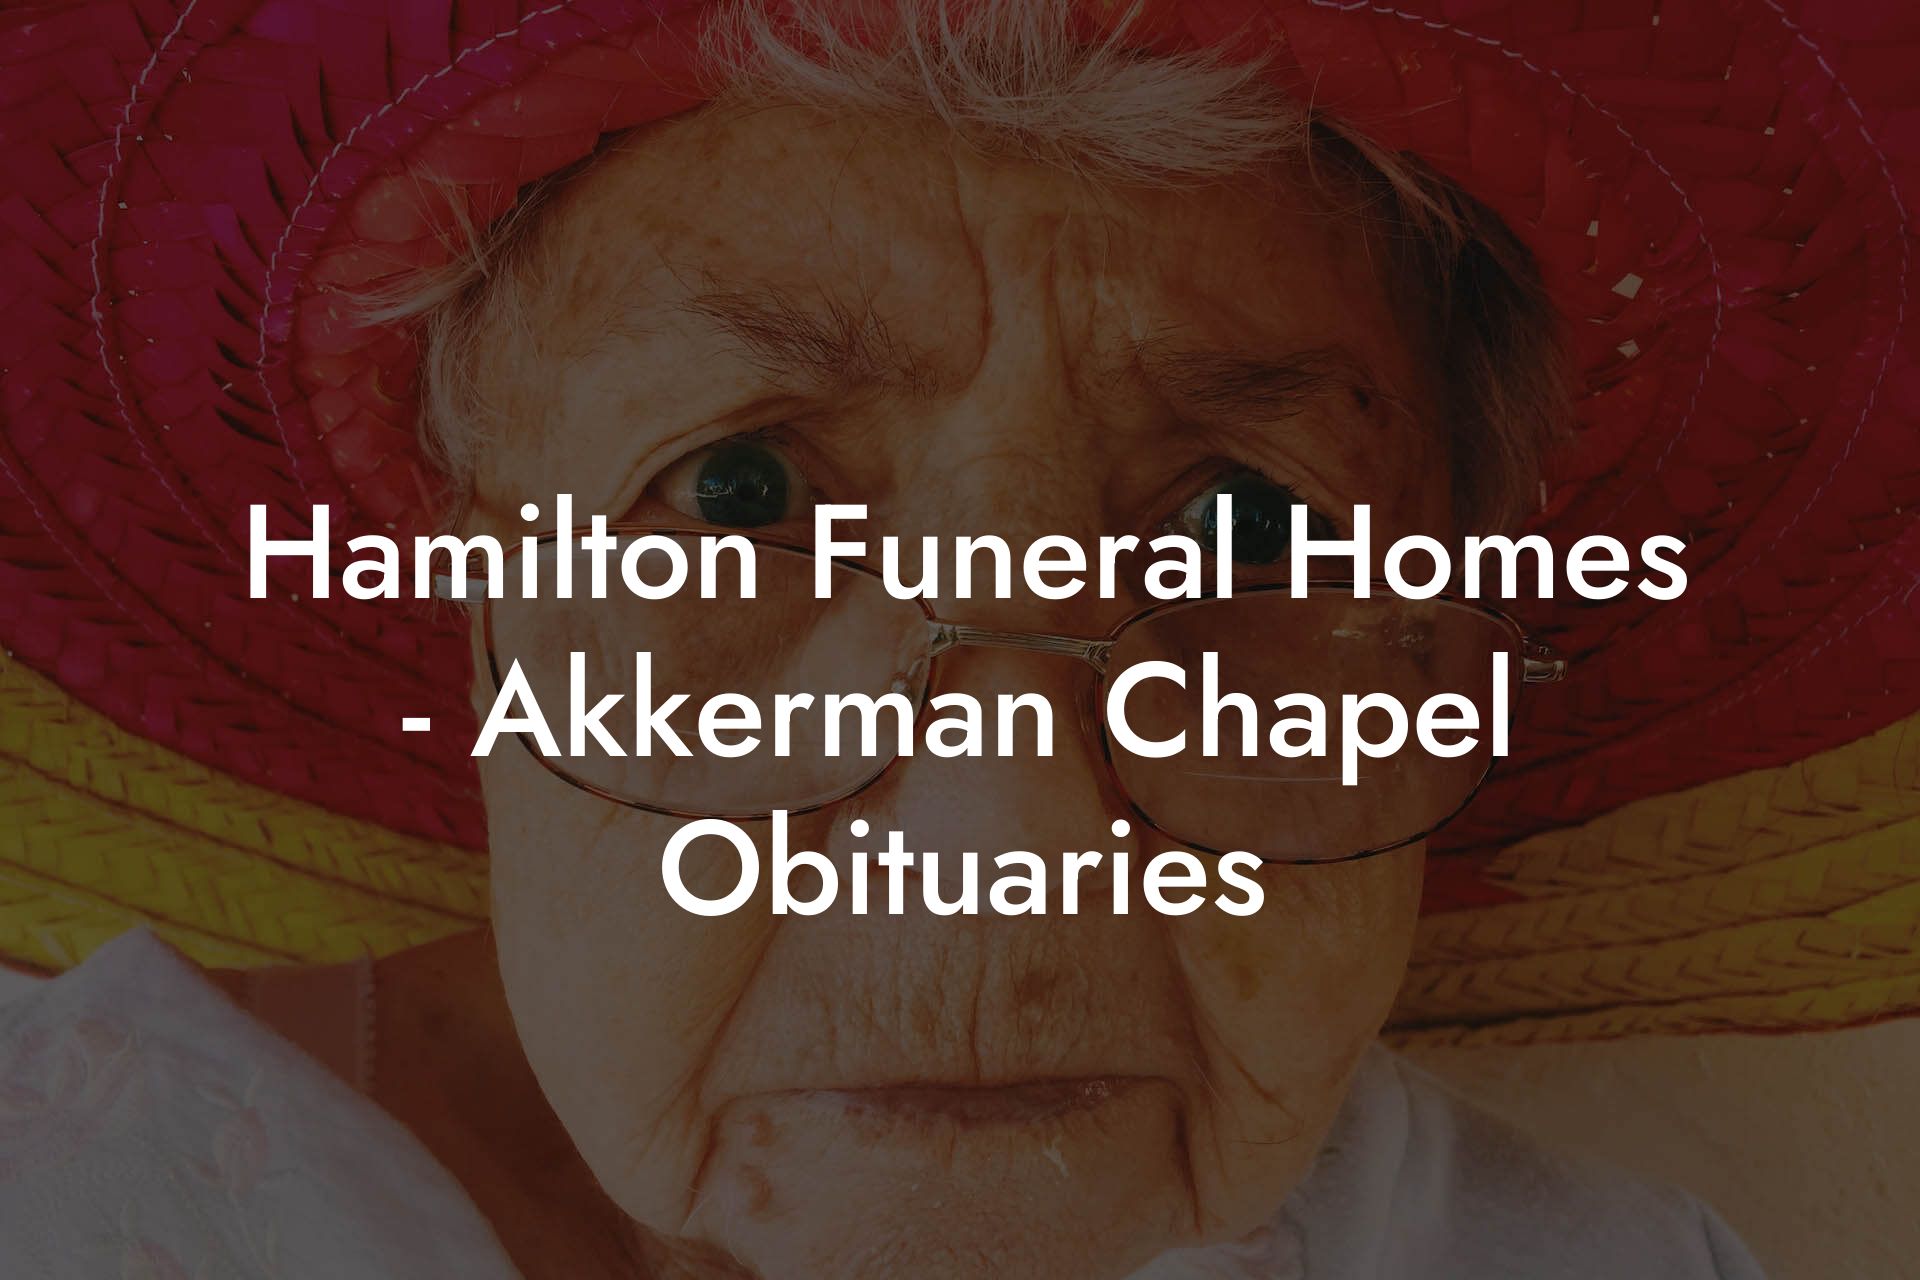 Hamilton Funeral Homes - Akkerman Chapel Obituaries